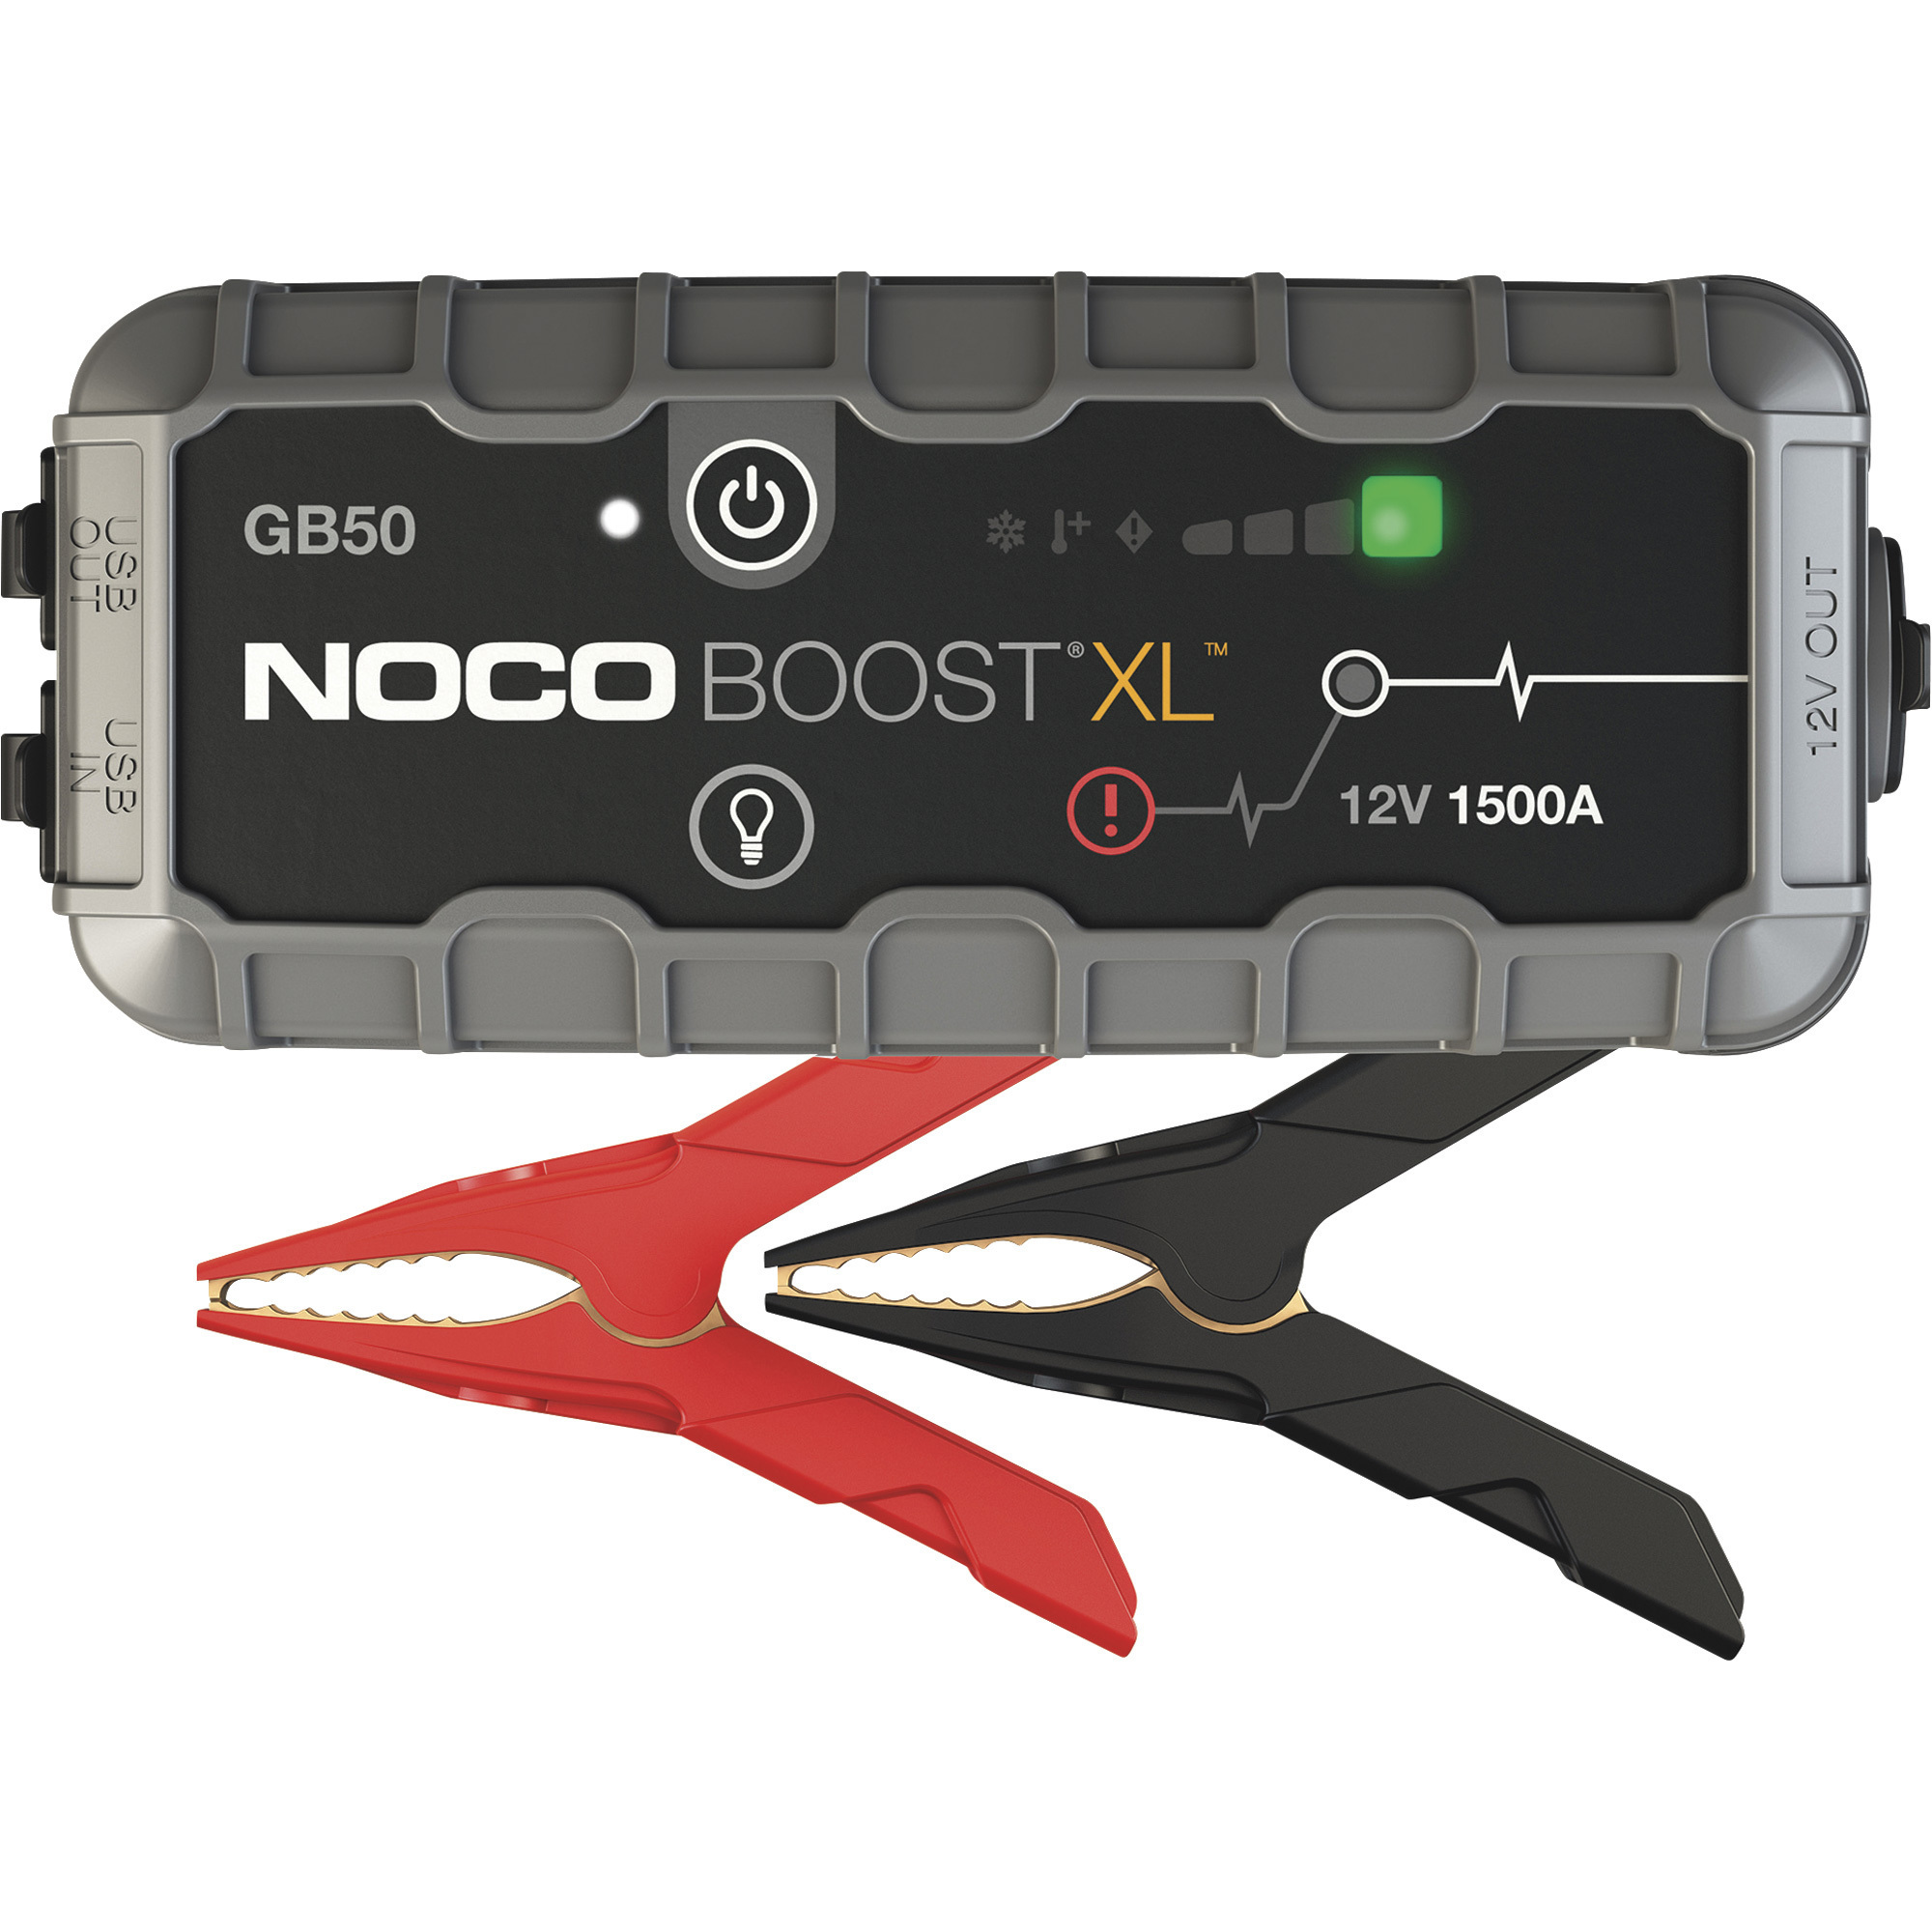 Noco Genius Boost XL Compact Lithium-Ion Jumpstarter â 1500 Amps, Model GB50